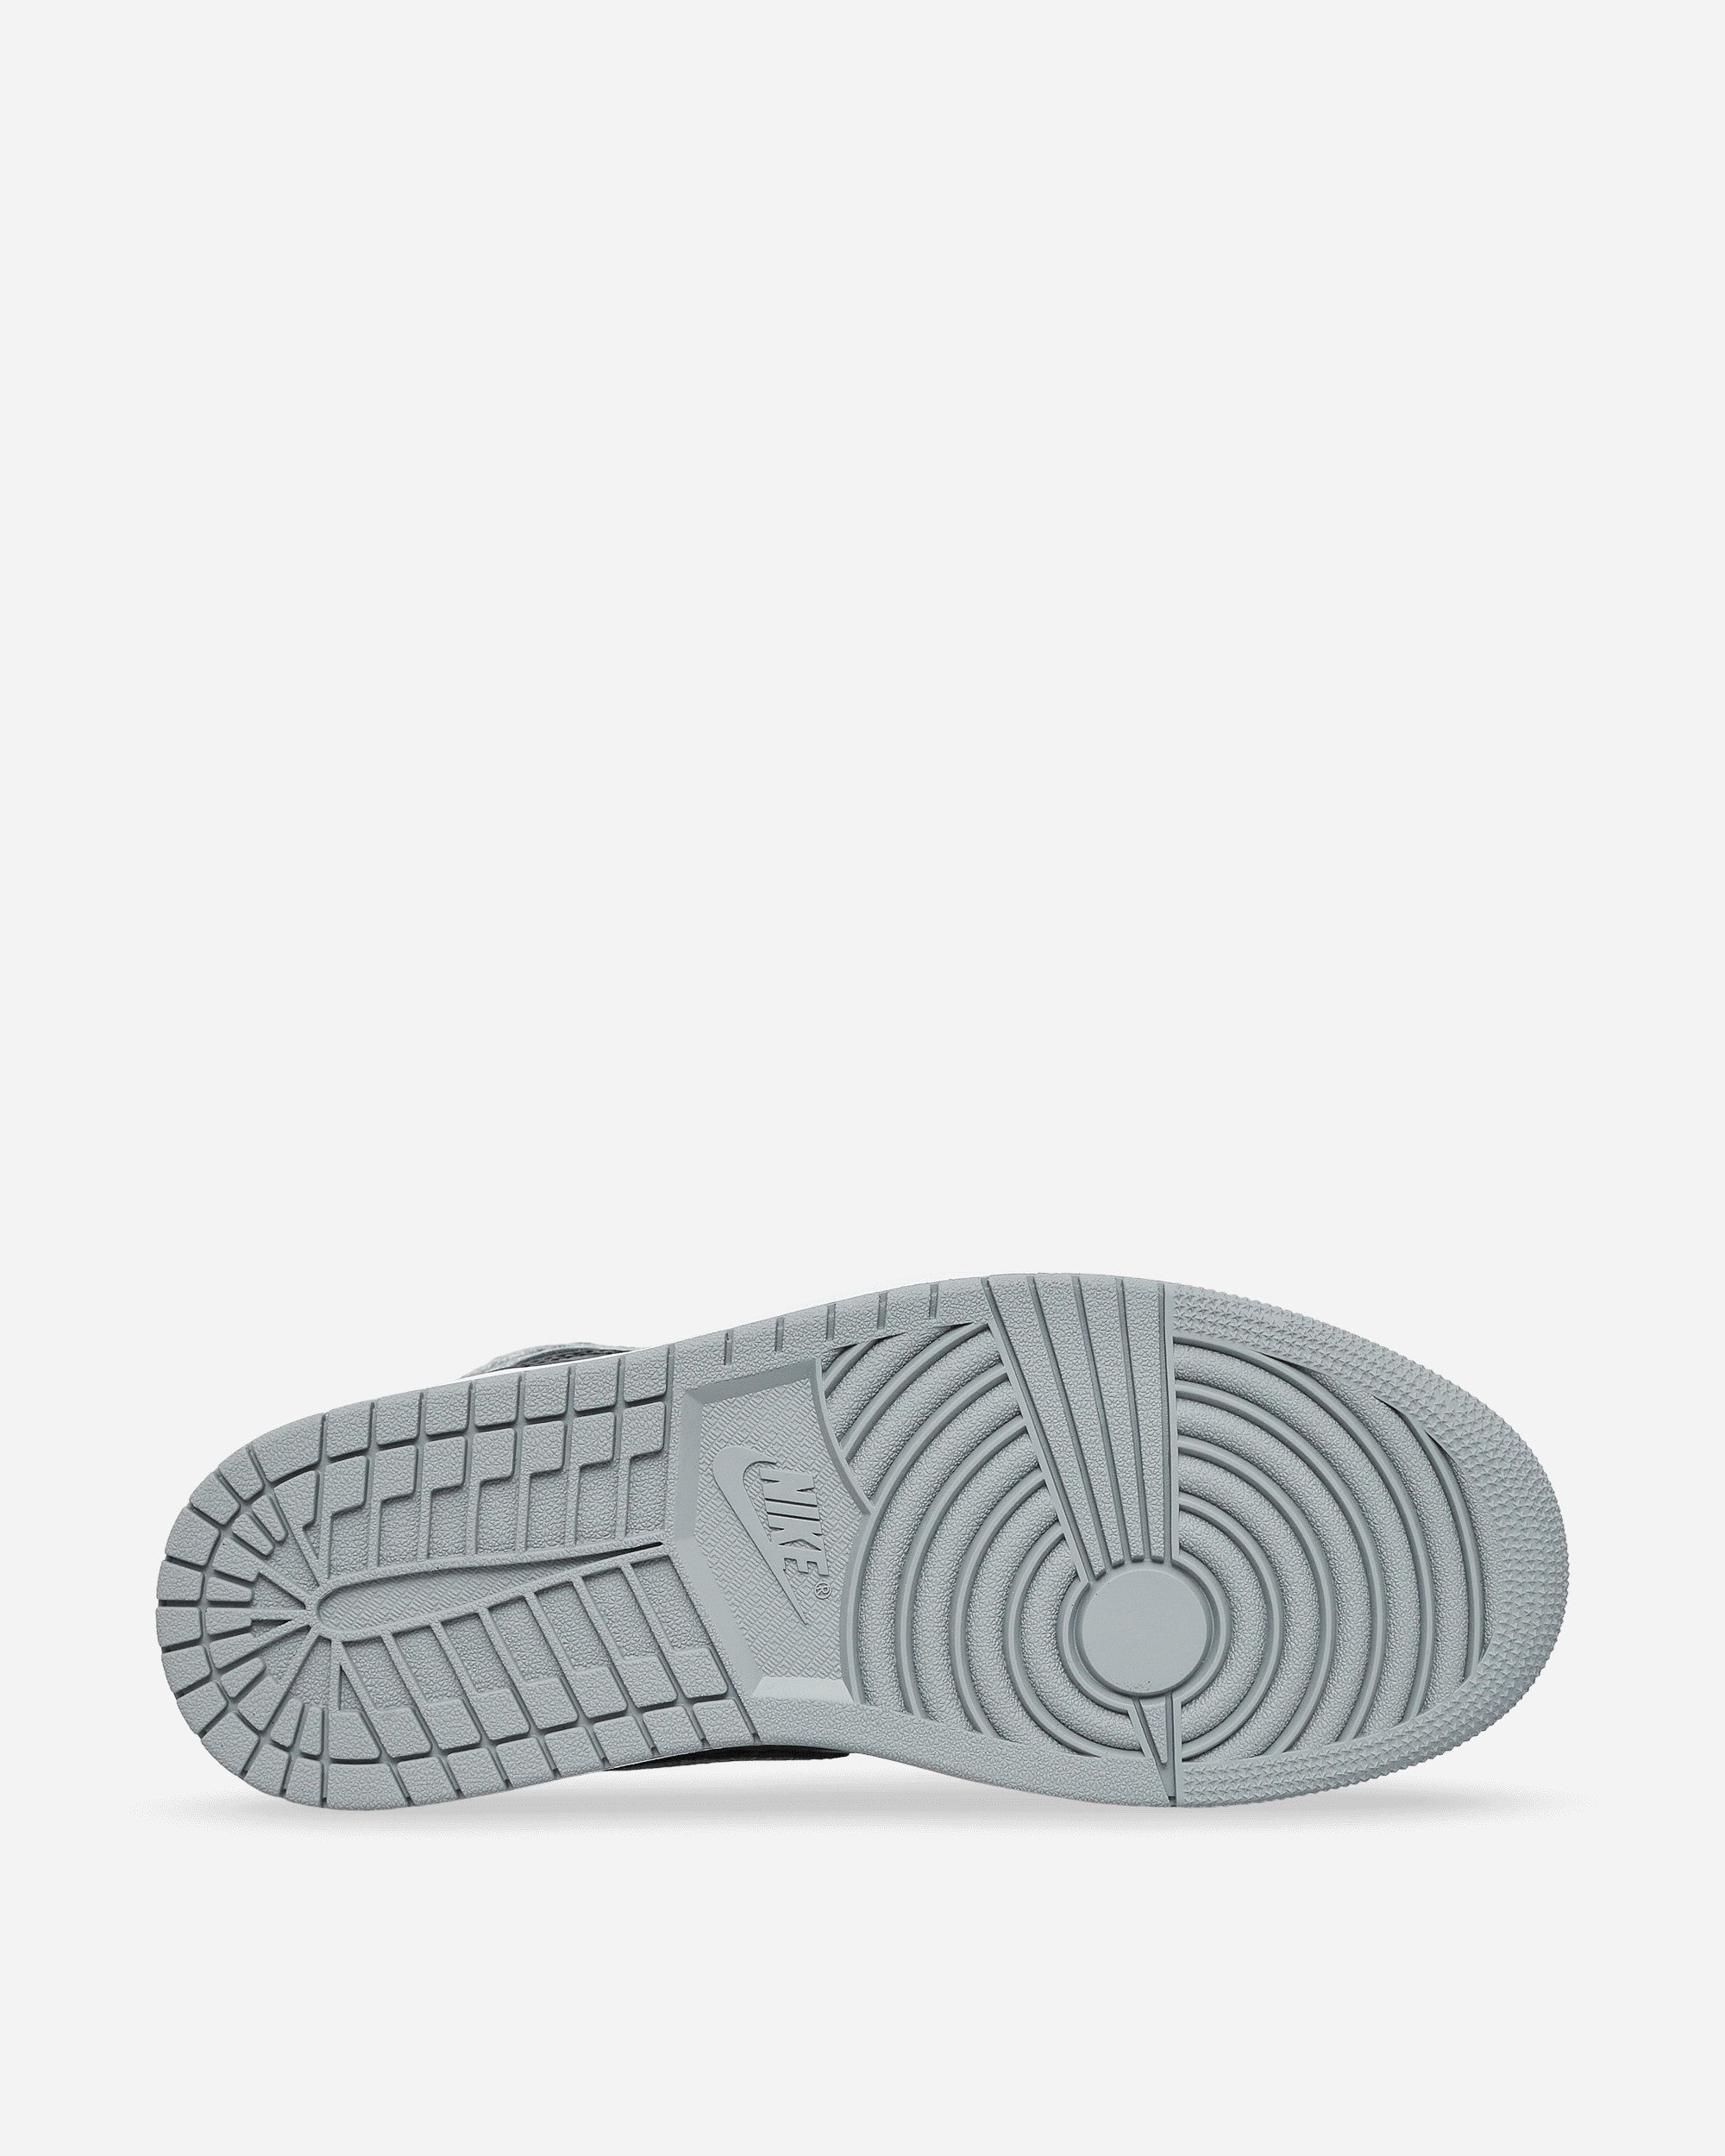 Nike Jordan Air Jordan 1 Retro High Og Black/White Sneakers High 555088-036